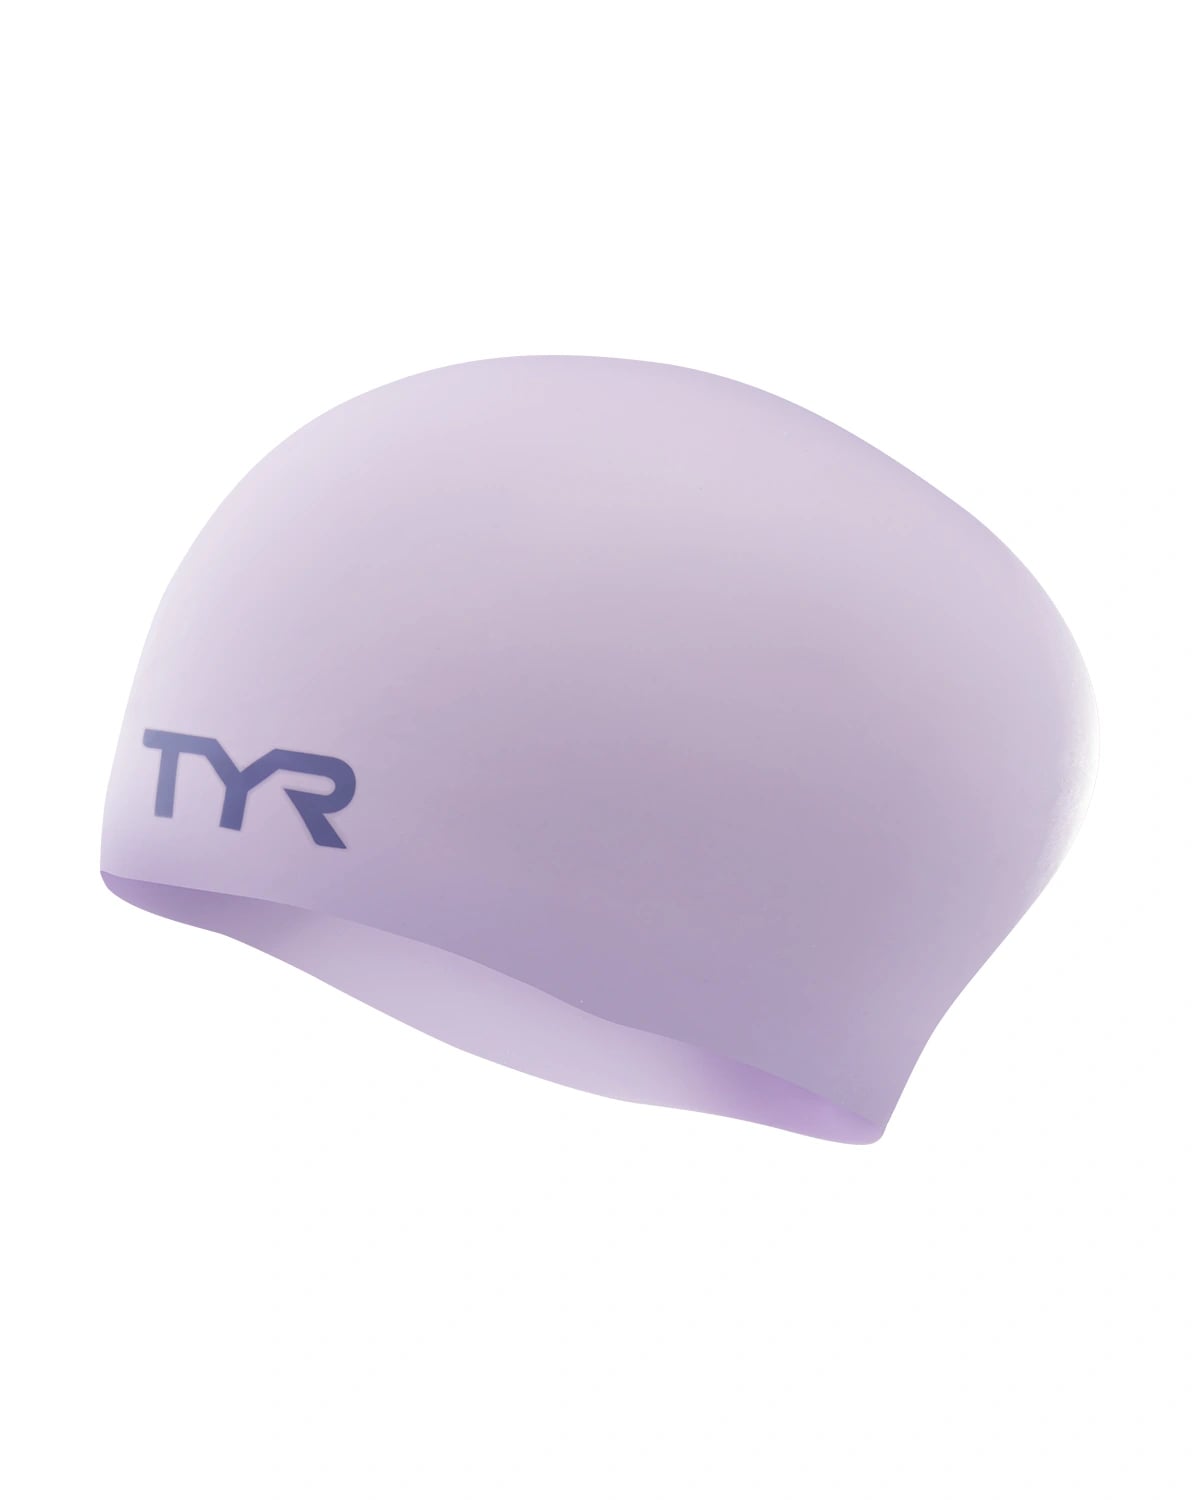 TYR Adult Silicone Swim Cap - USA